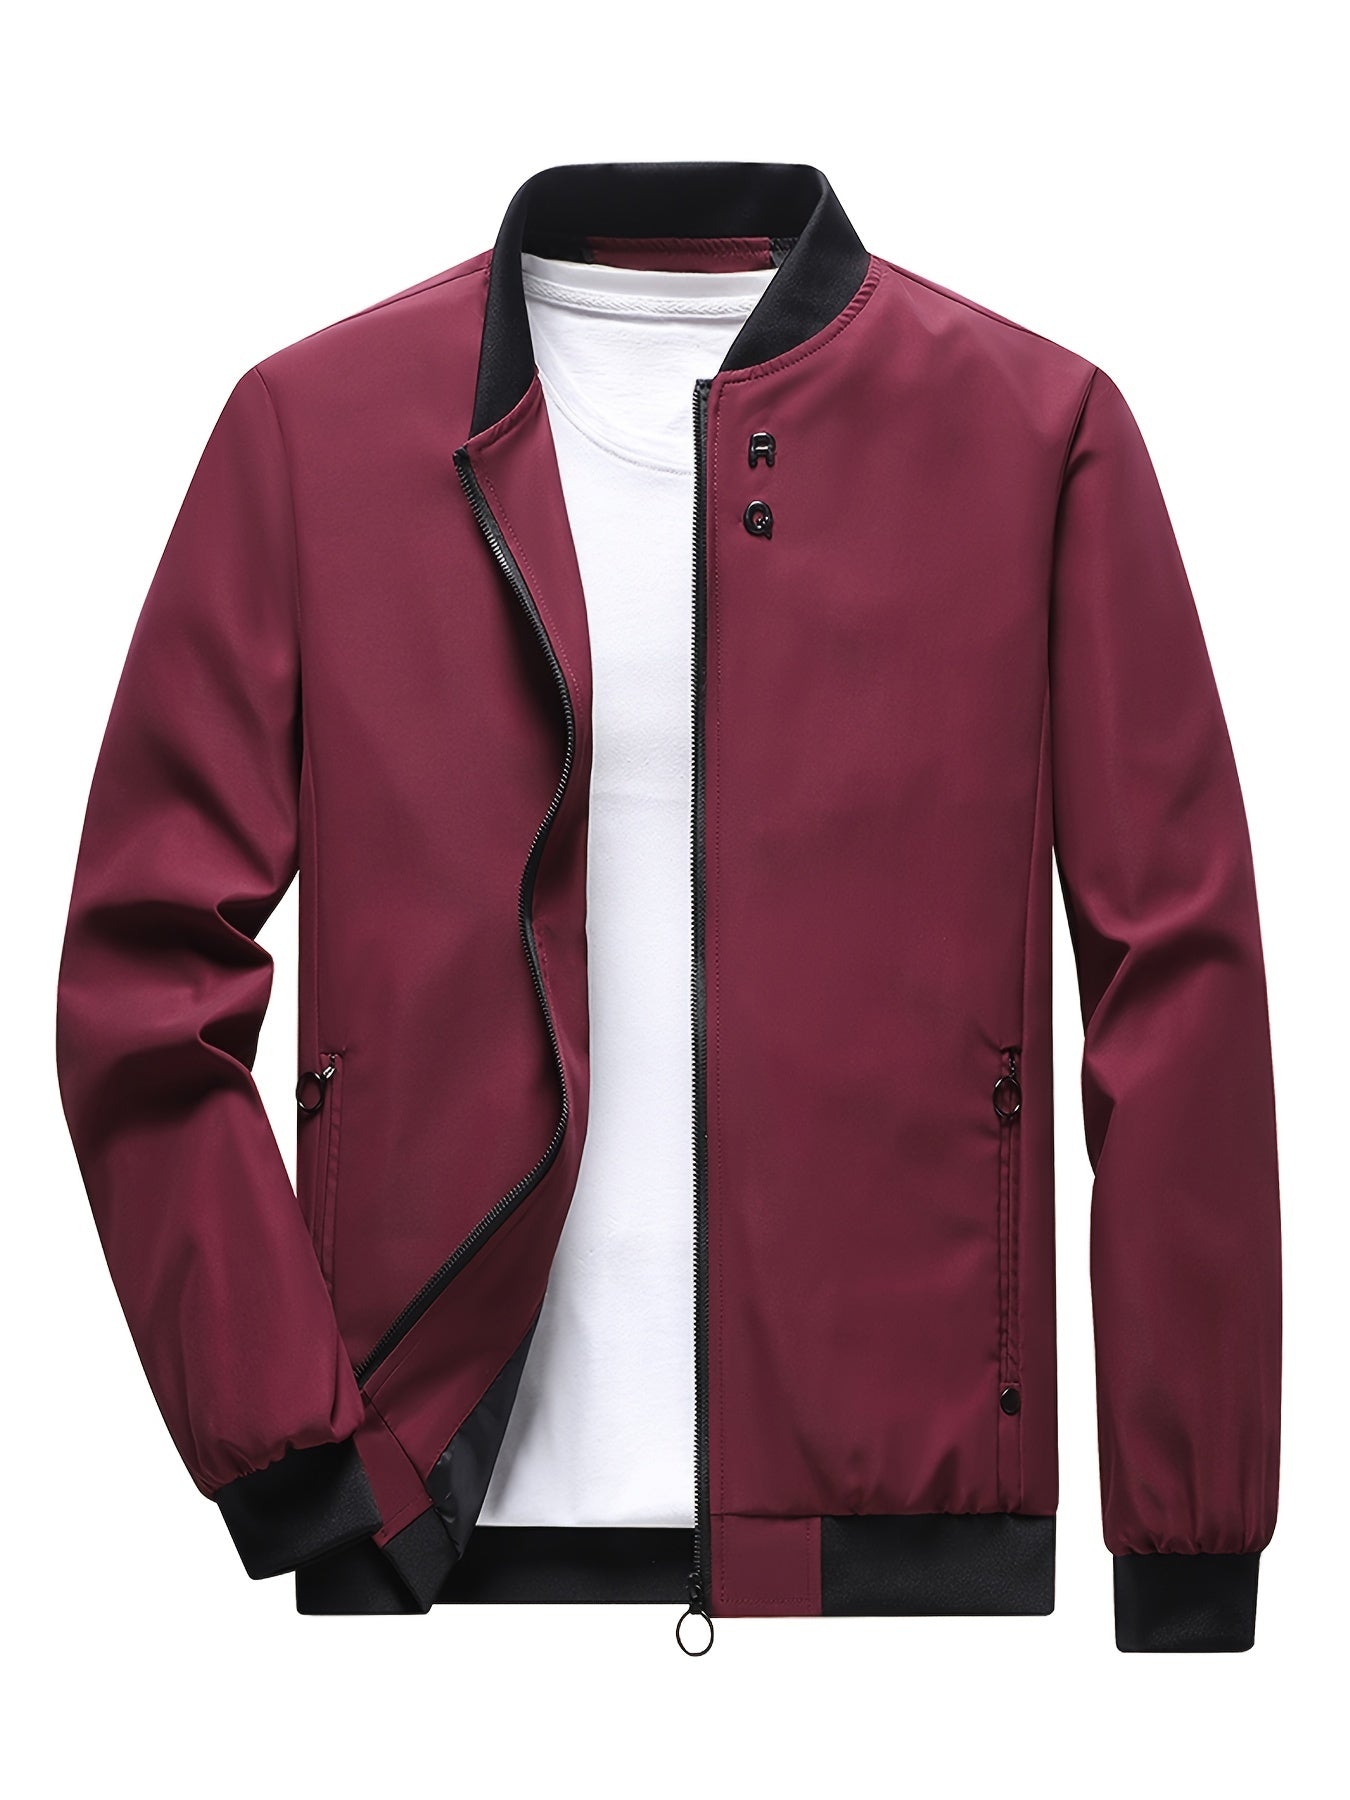 Men's Fashion Crew Collar Zipper Slim Varsity Jackets, Men's Tops For Spring And Autumn